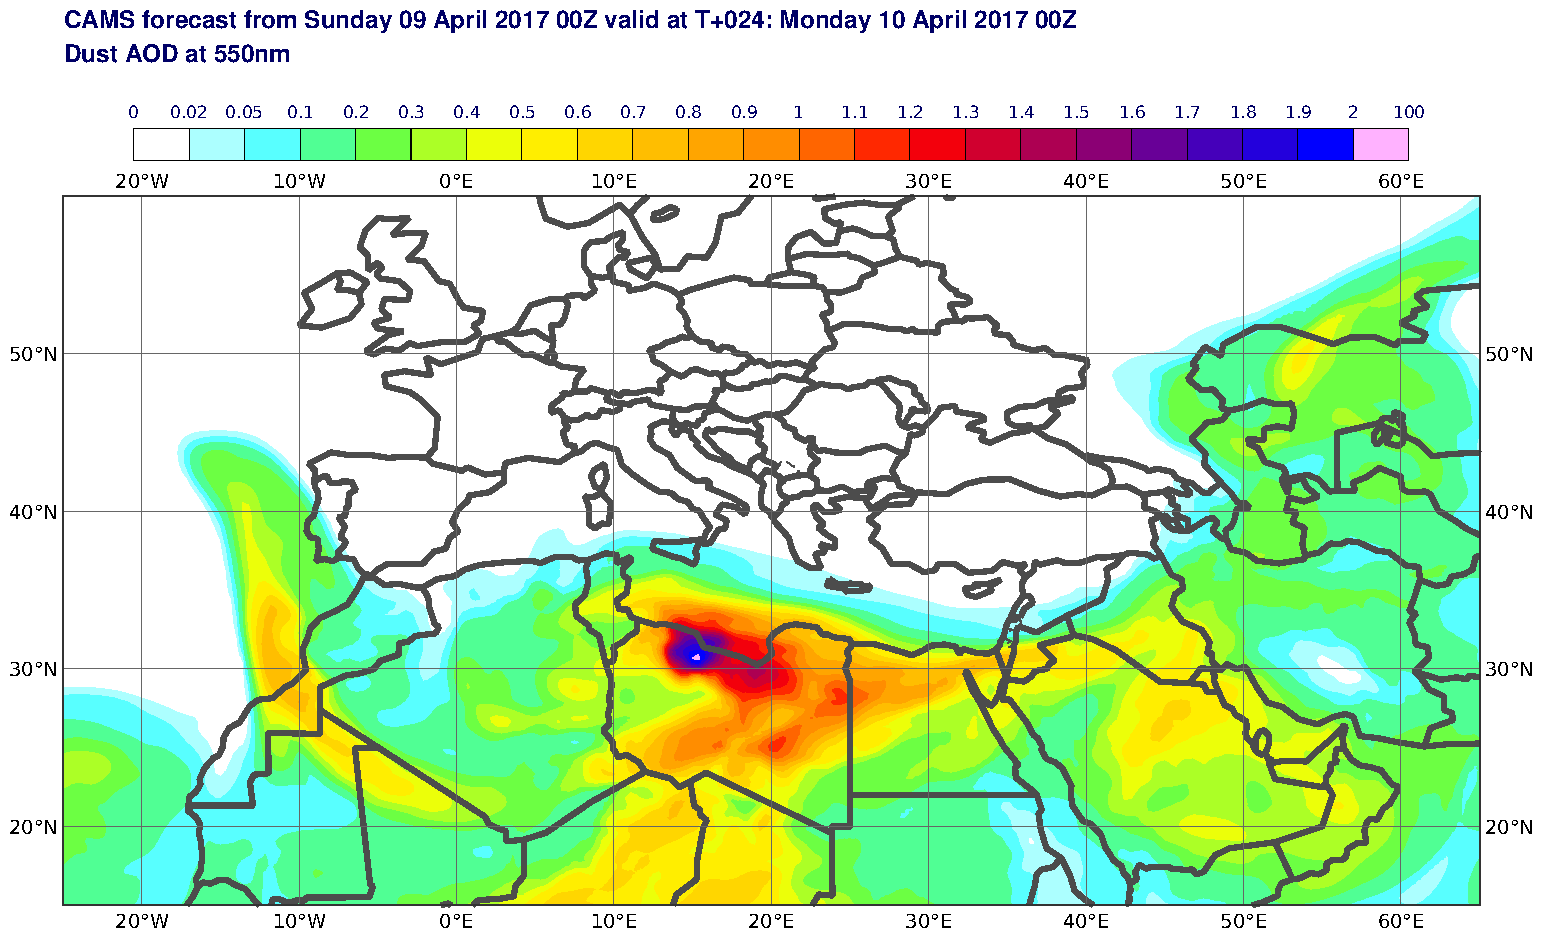 Dust AOD at 550nm valid at T24 - 2017-04-10 00:00